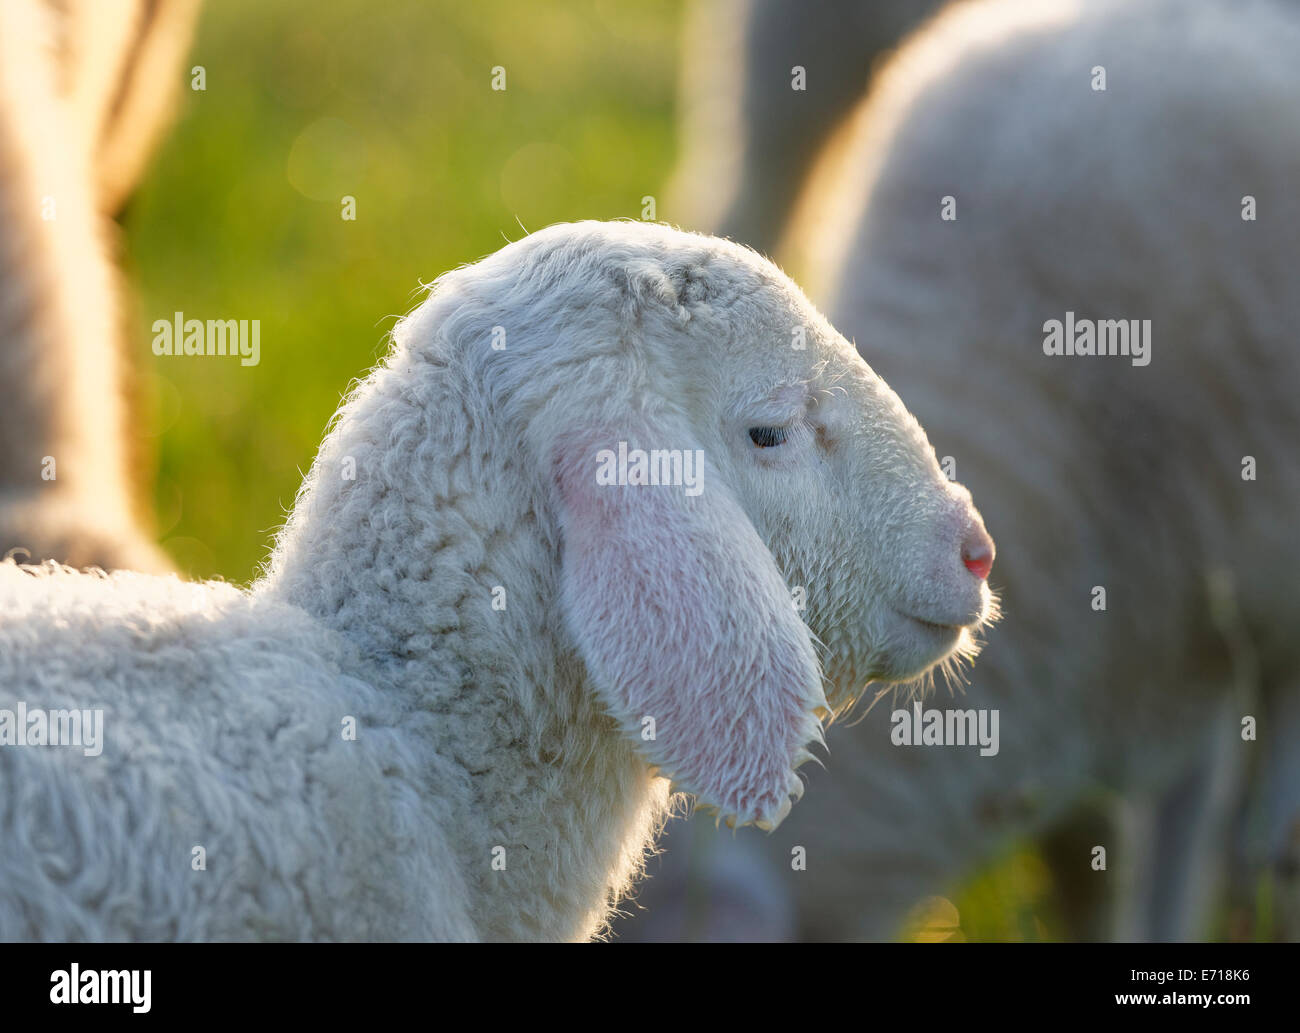 Germany, Bavaria, lamb in morning light Stock Photo